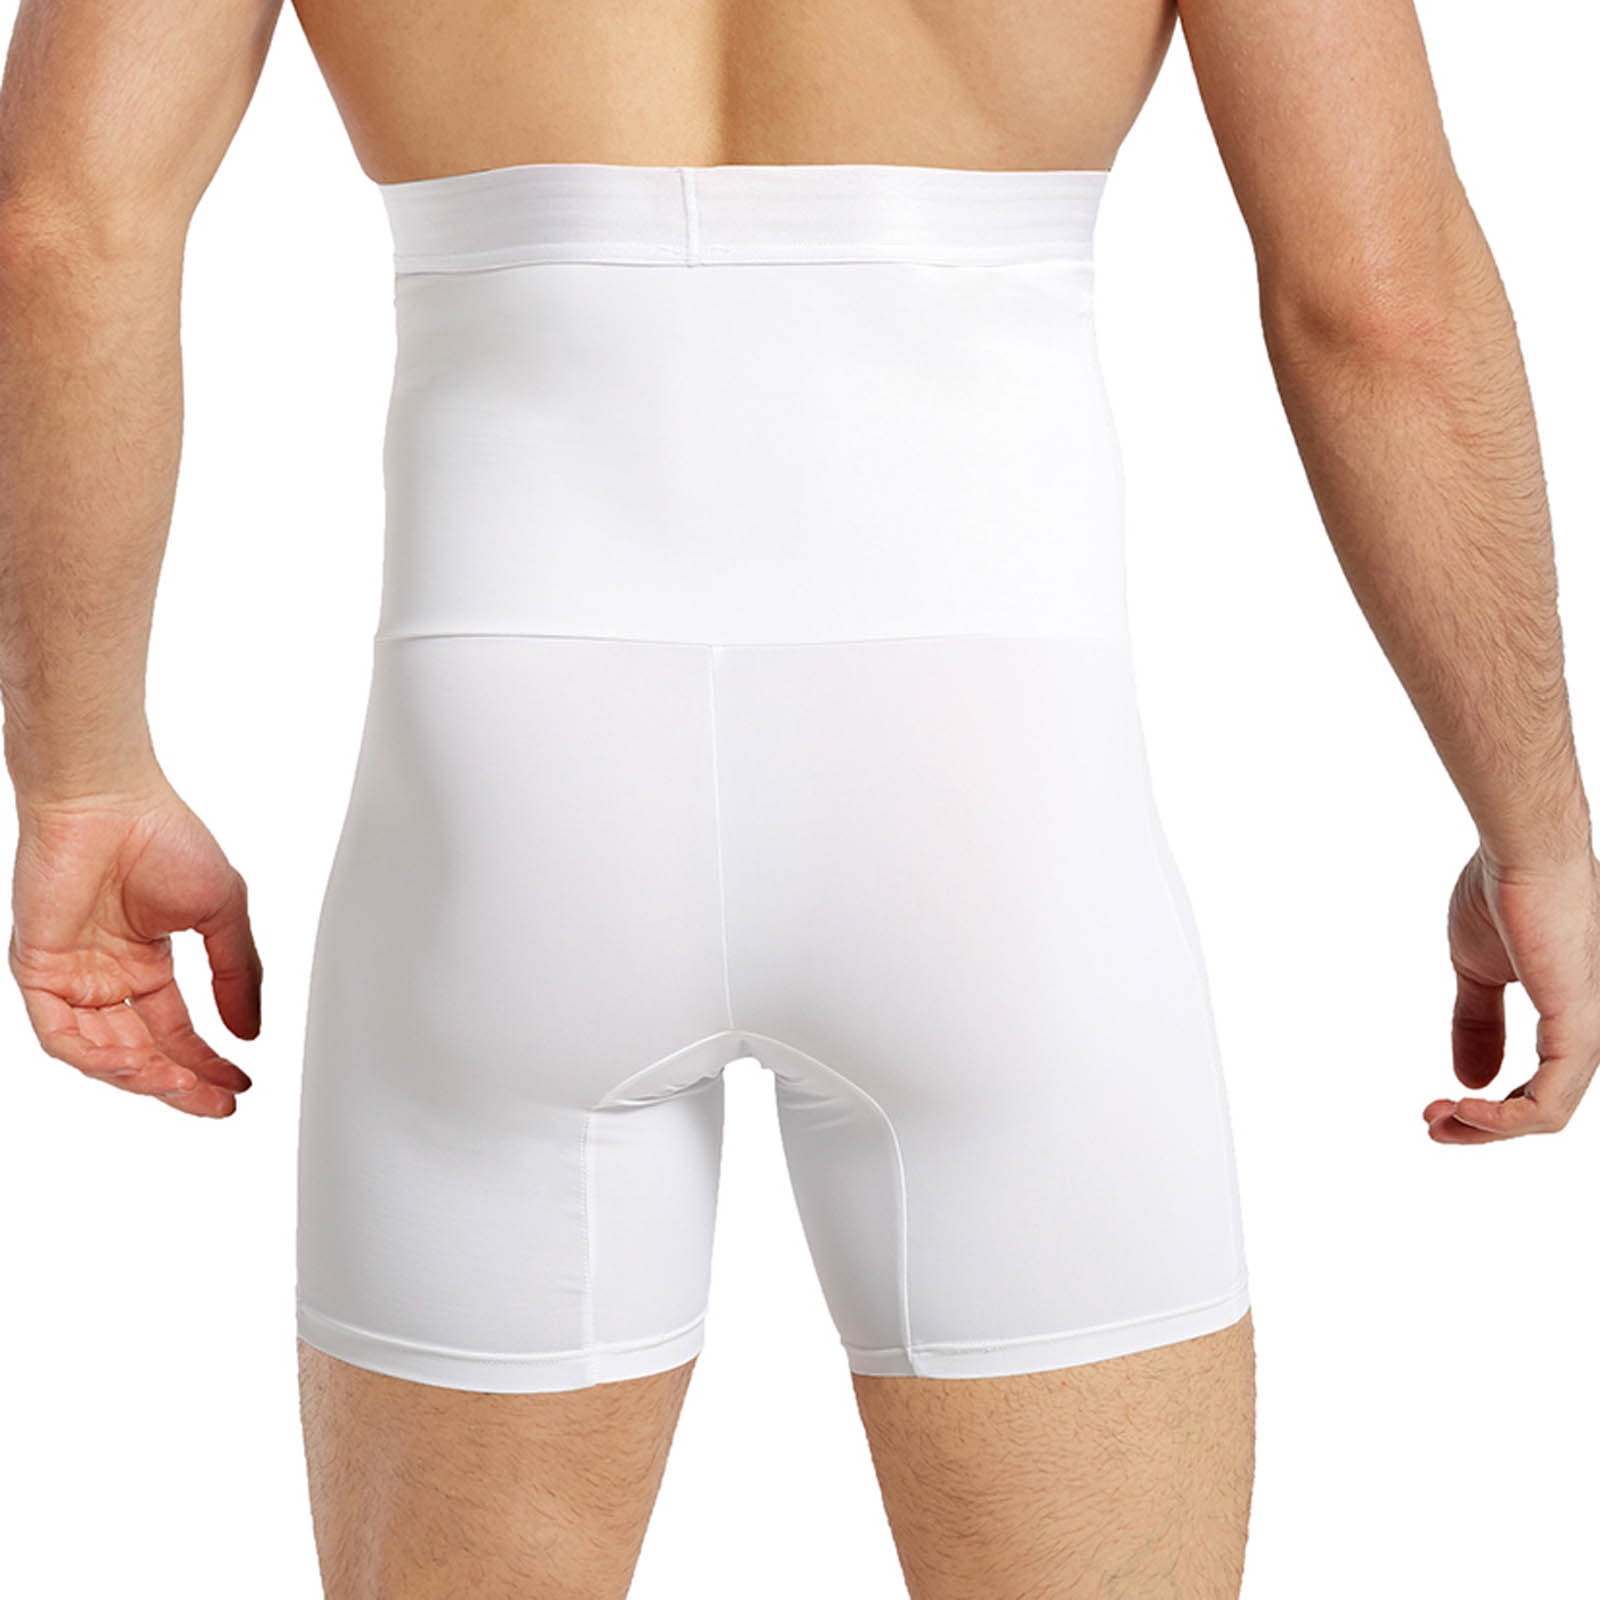 Meitianfacai Men's Underwear Men High-waisted Abdomen Pants Shaping ...